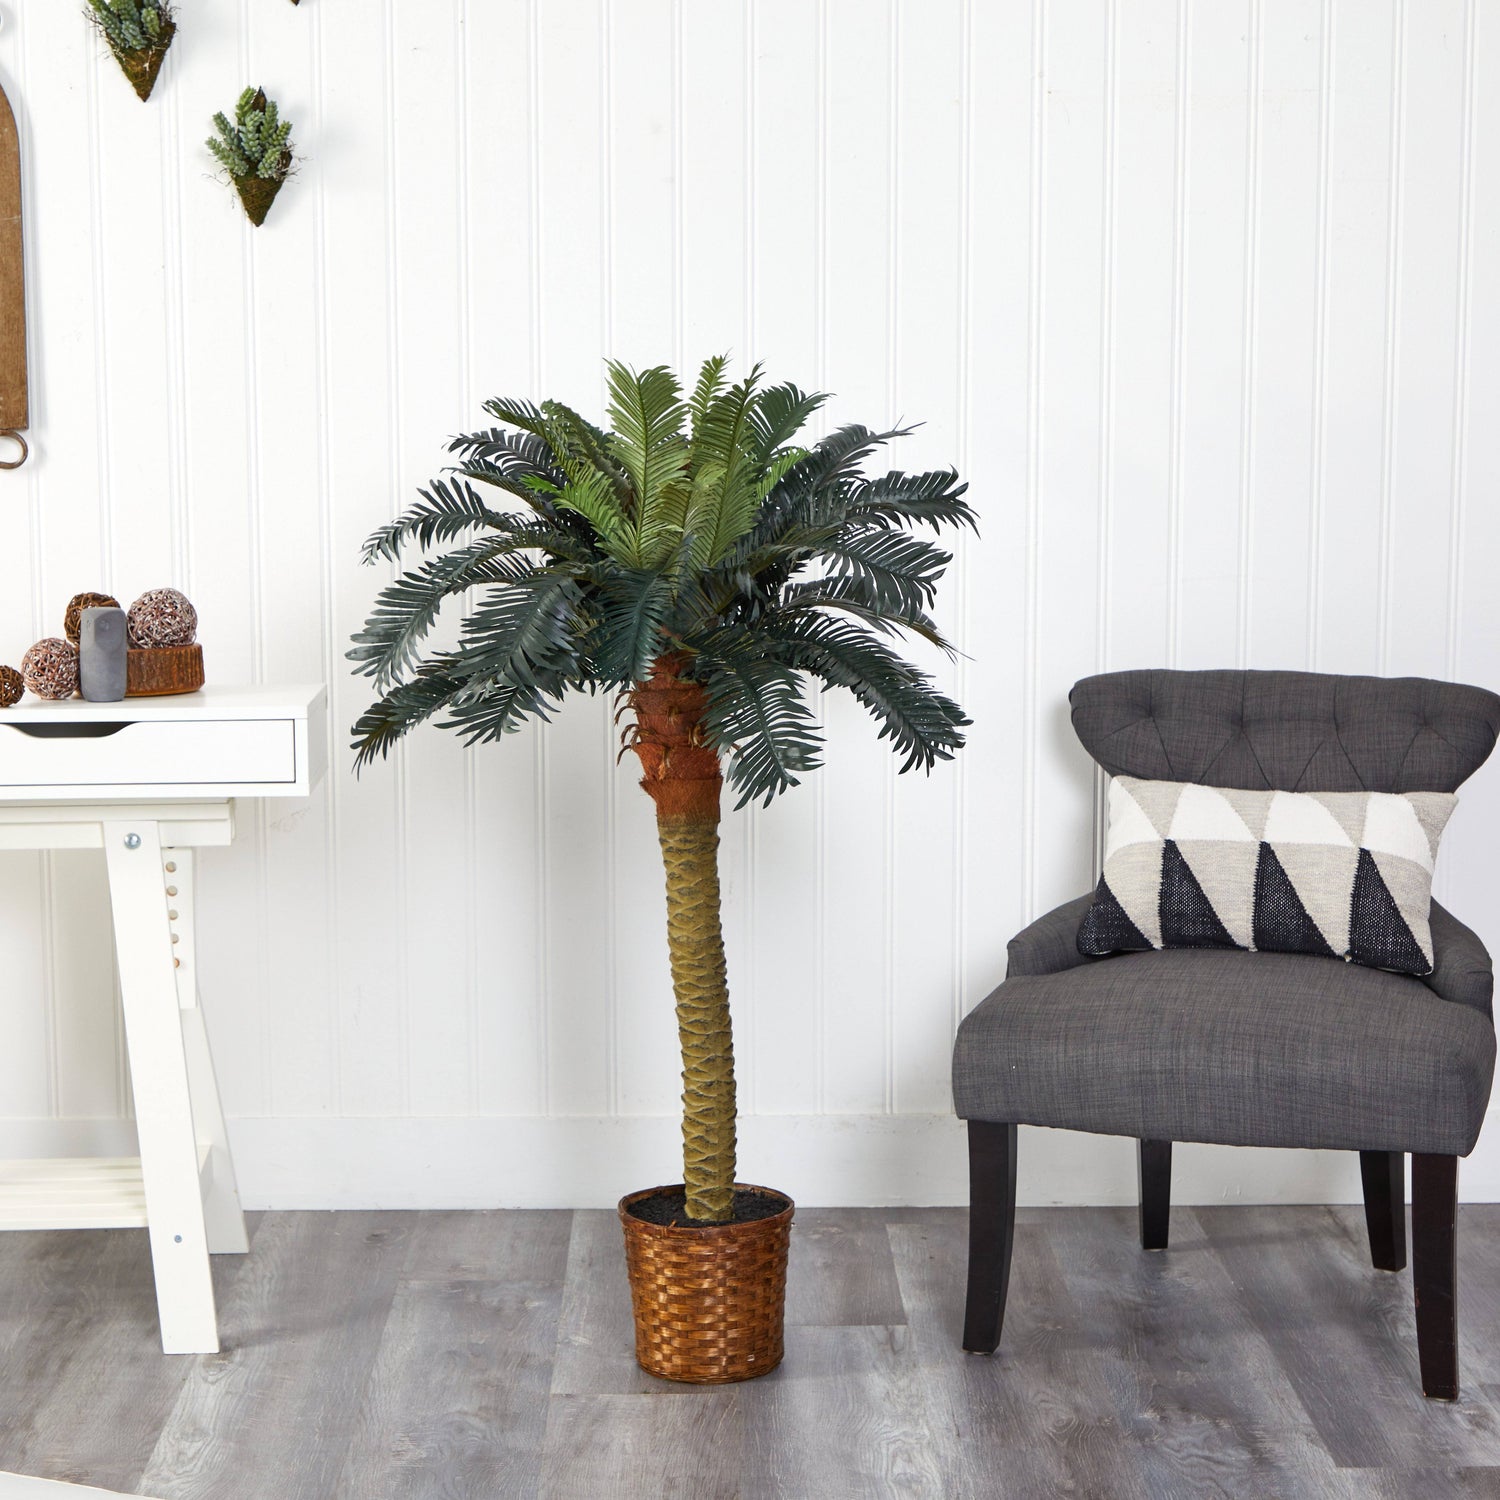 4' Sago Silk Palm Tree